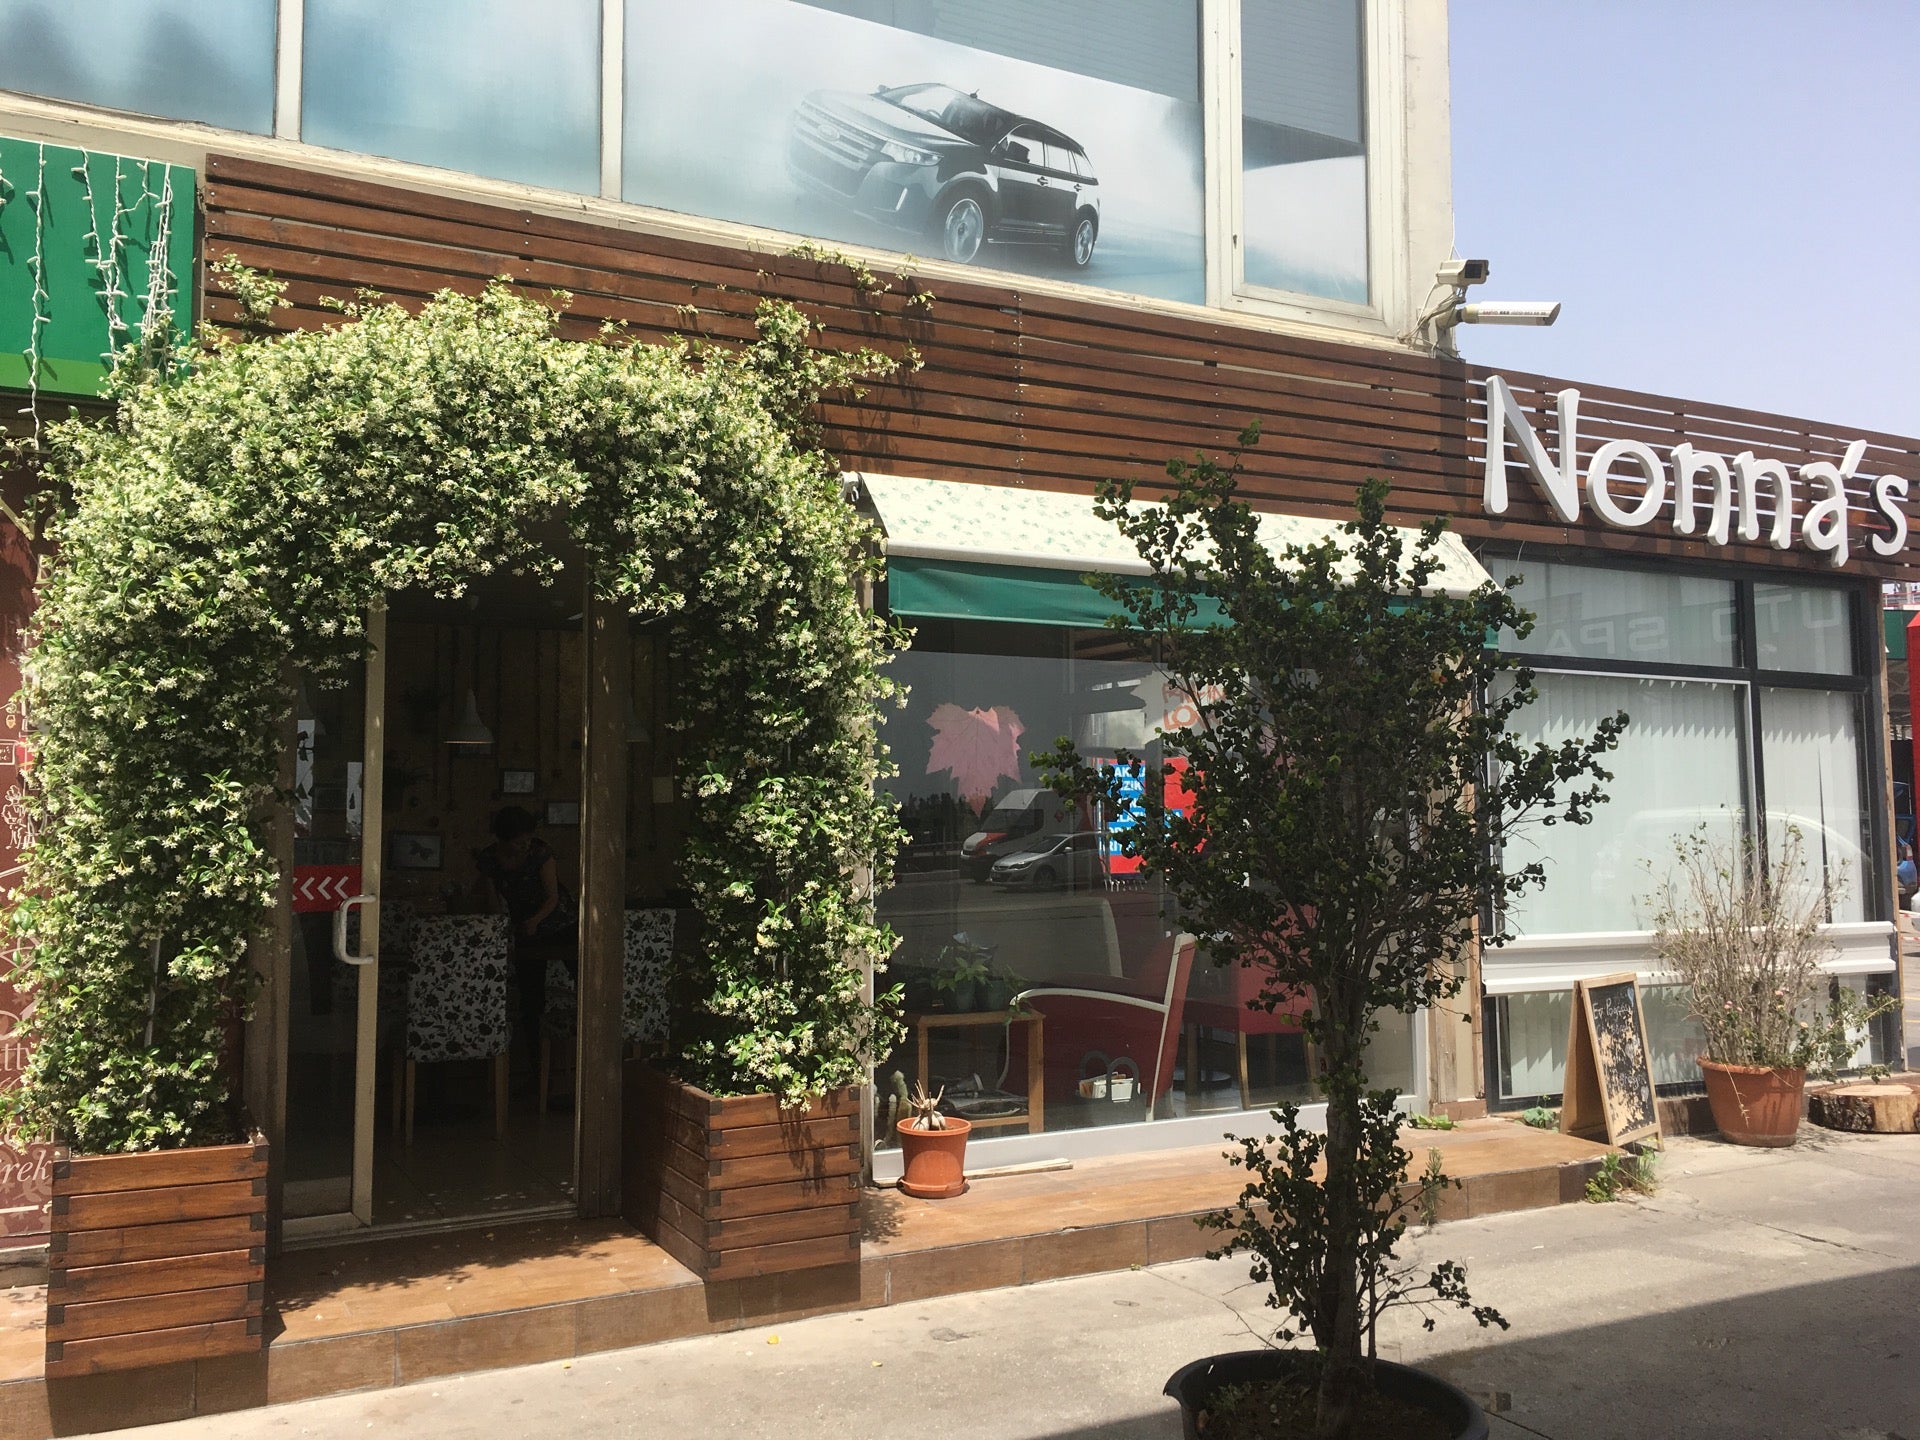 Nonna's Börek Cafe